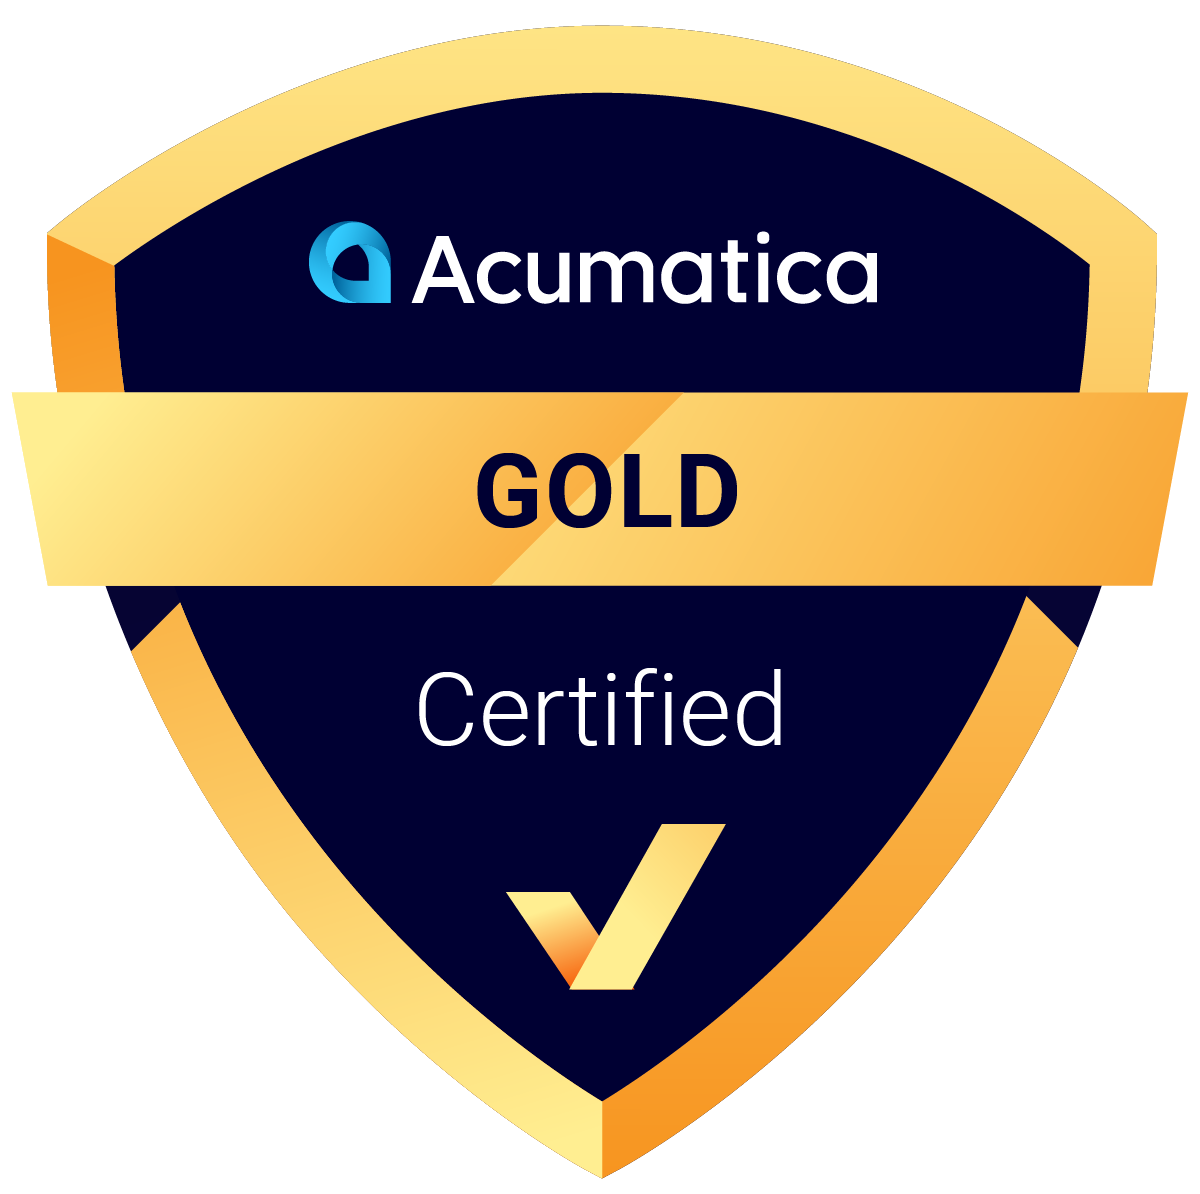 Gold Certified Acumatica Partner badge. AcuPower LTD